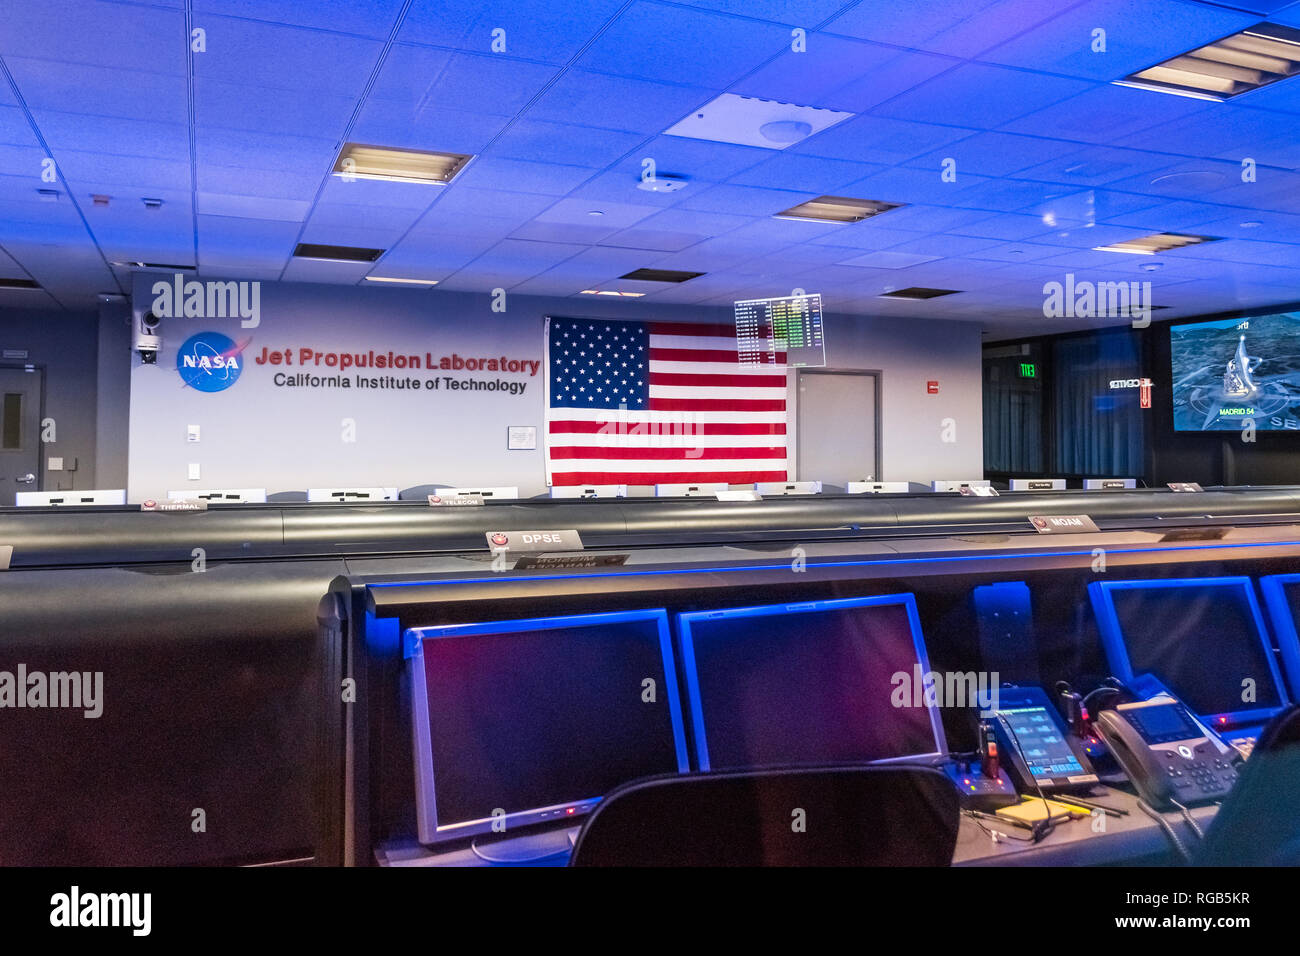 Juni 10, 2018 La Canada Flintridge/CA/USA - Innenansicht des Mission Control Center am Jet Propulsion Laboratory (JPL) Stockfoto